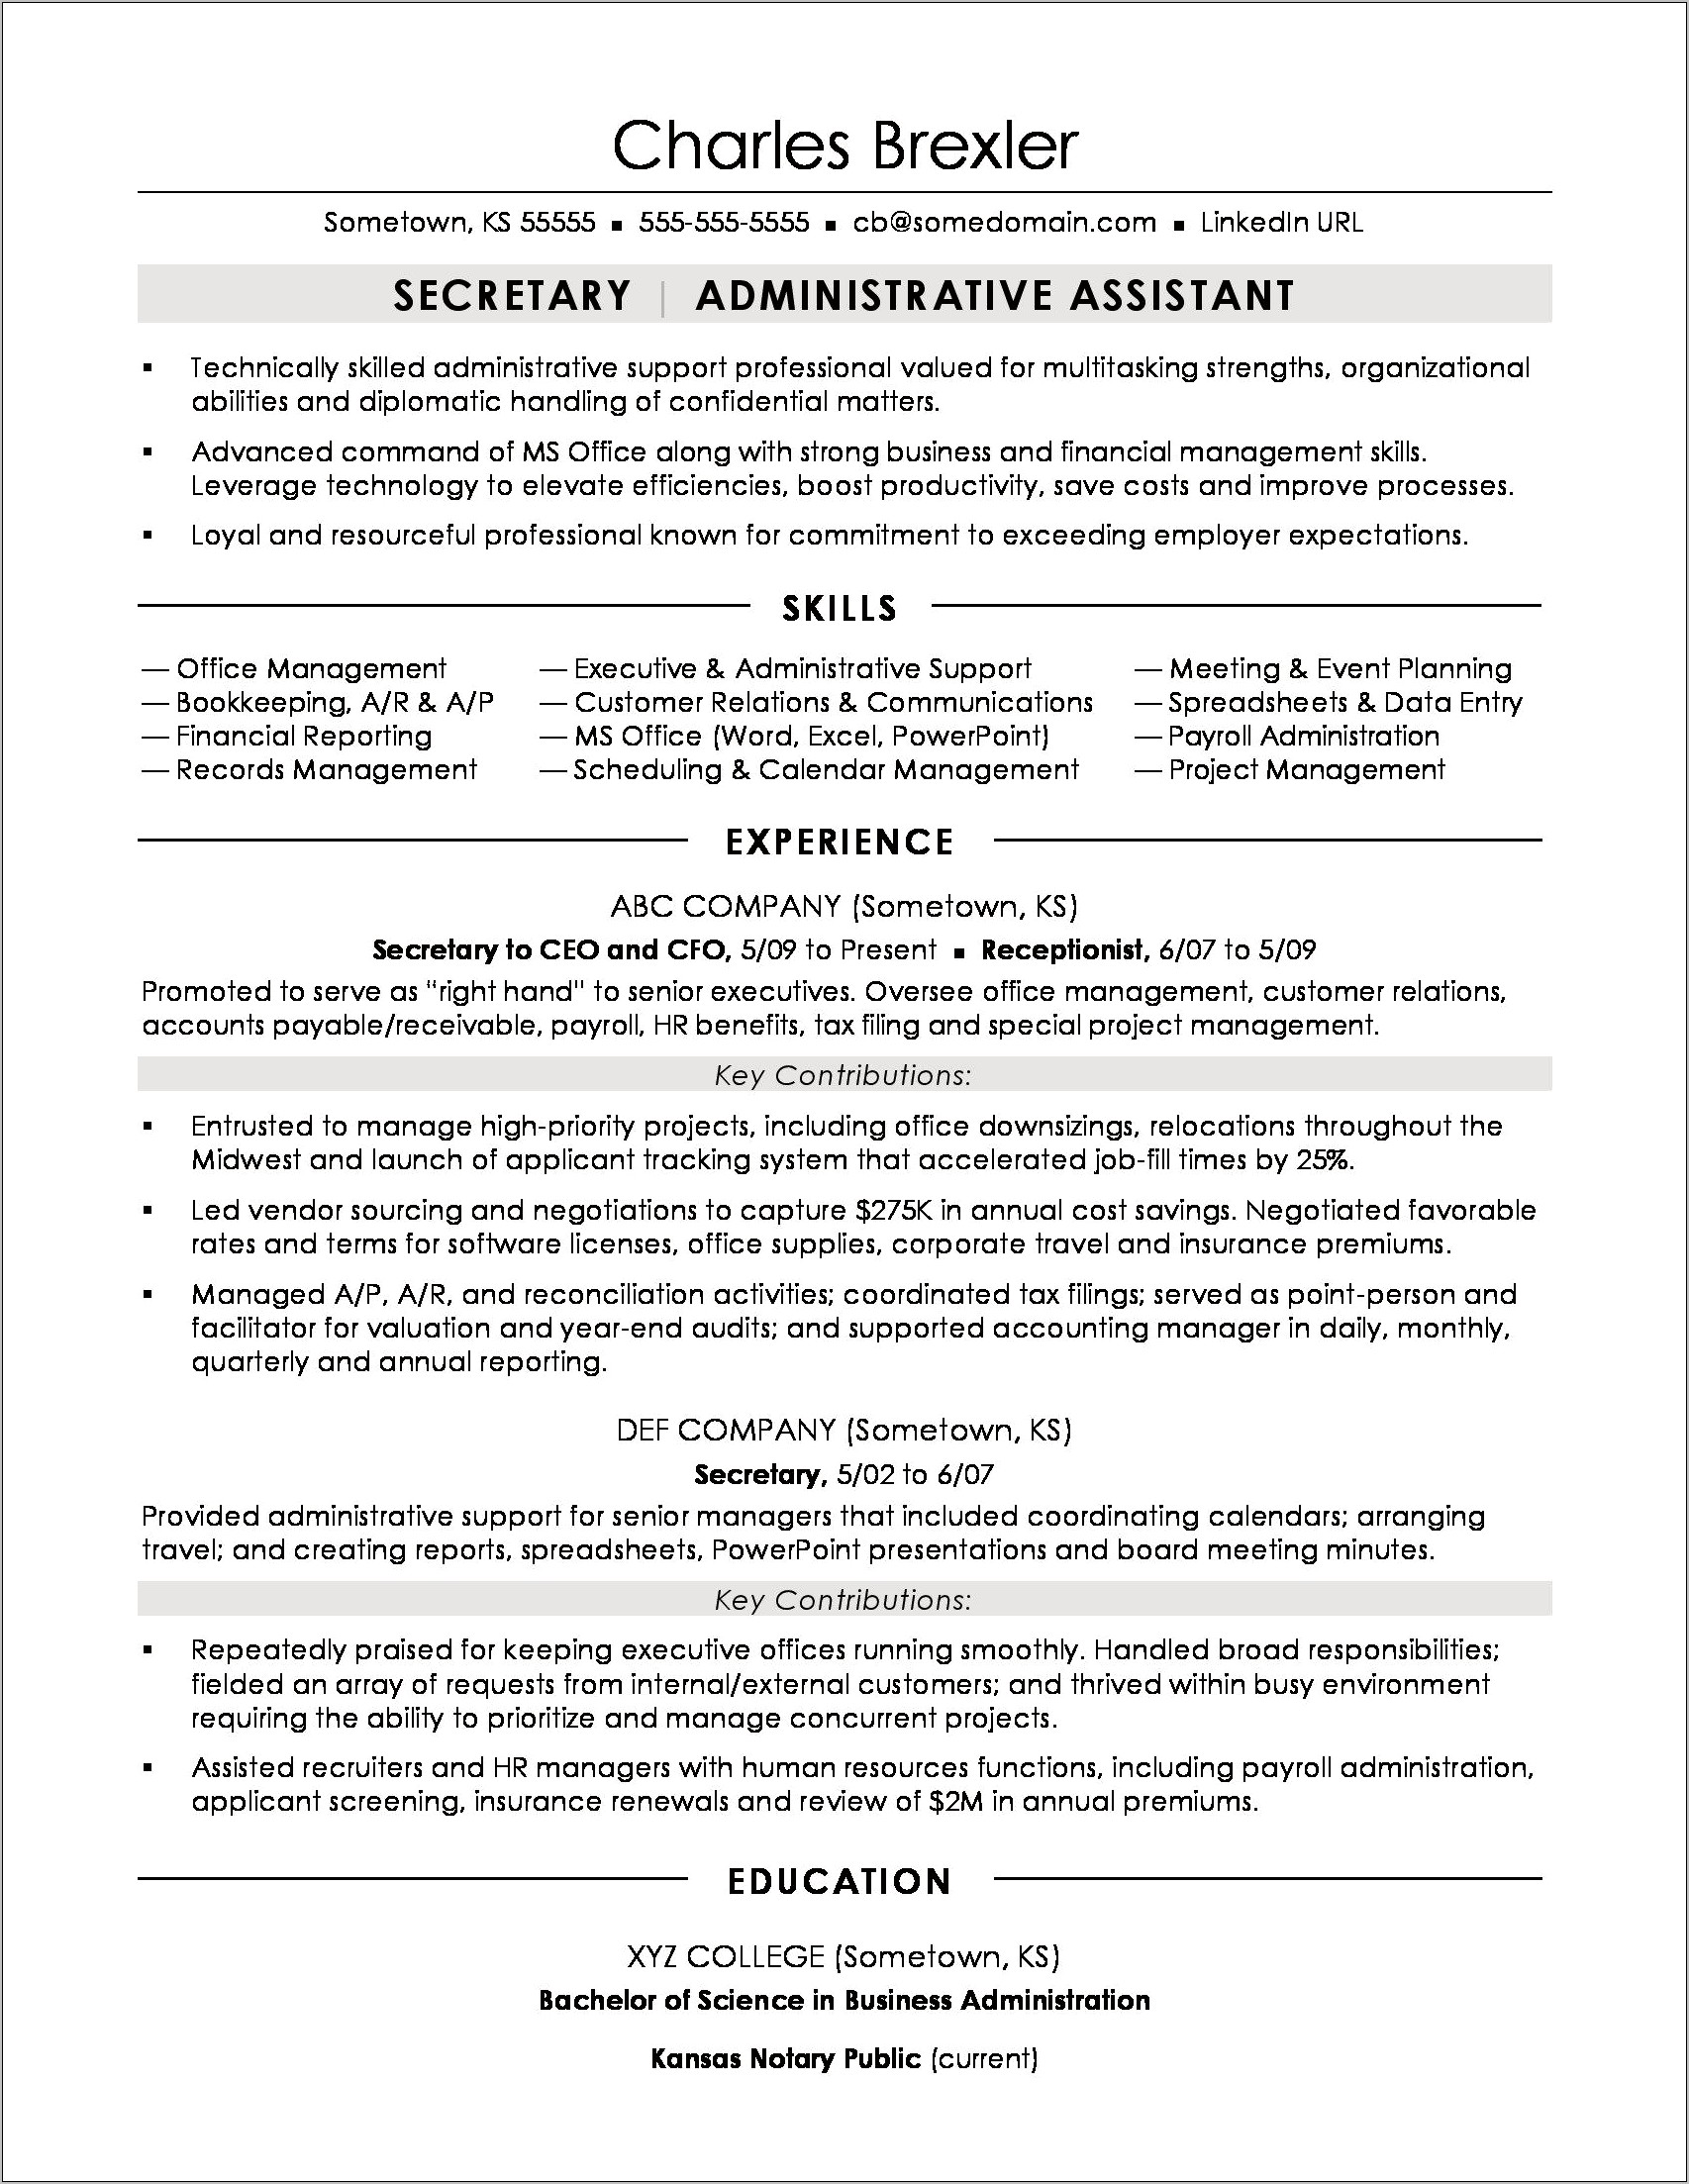 Sample Resume For School Adminstrative Position